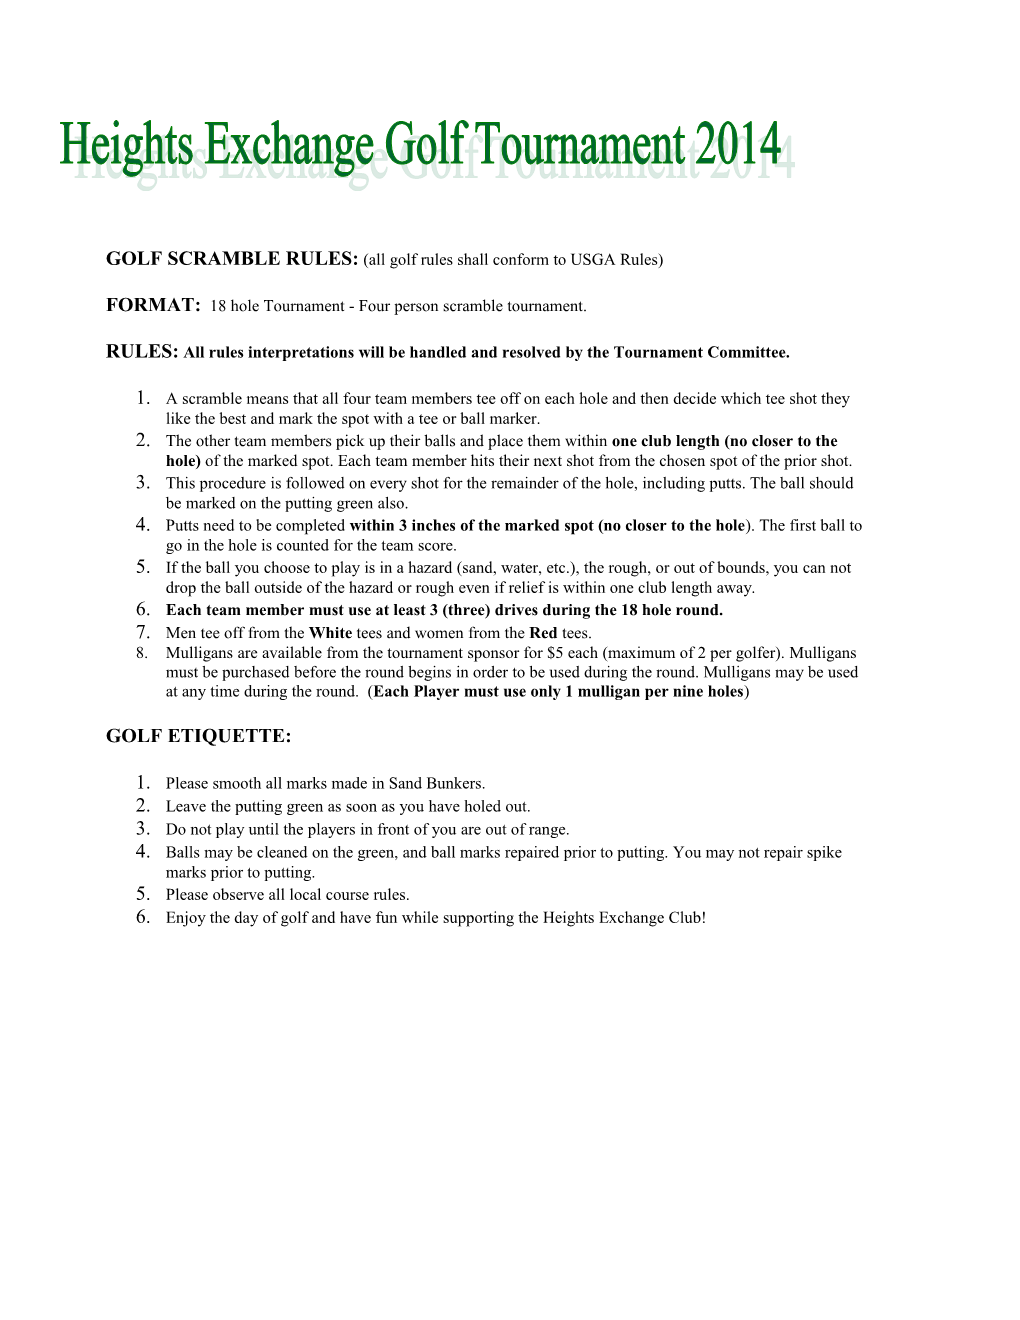 GOLF SCRAMBLE RULES: (All Golf Rules Shall Conform to USGA Rules)